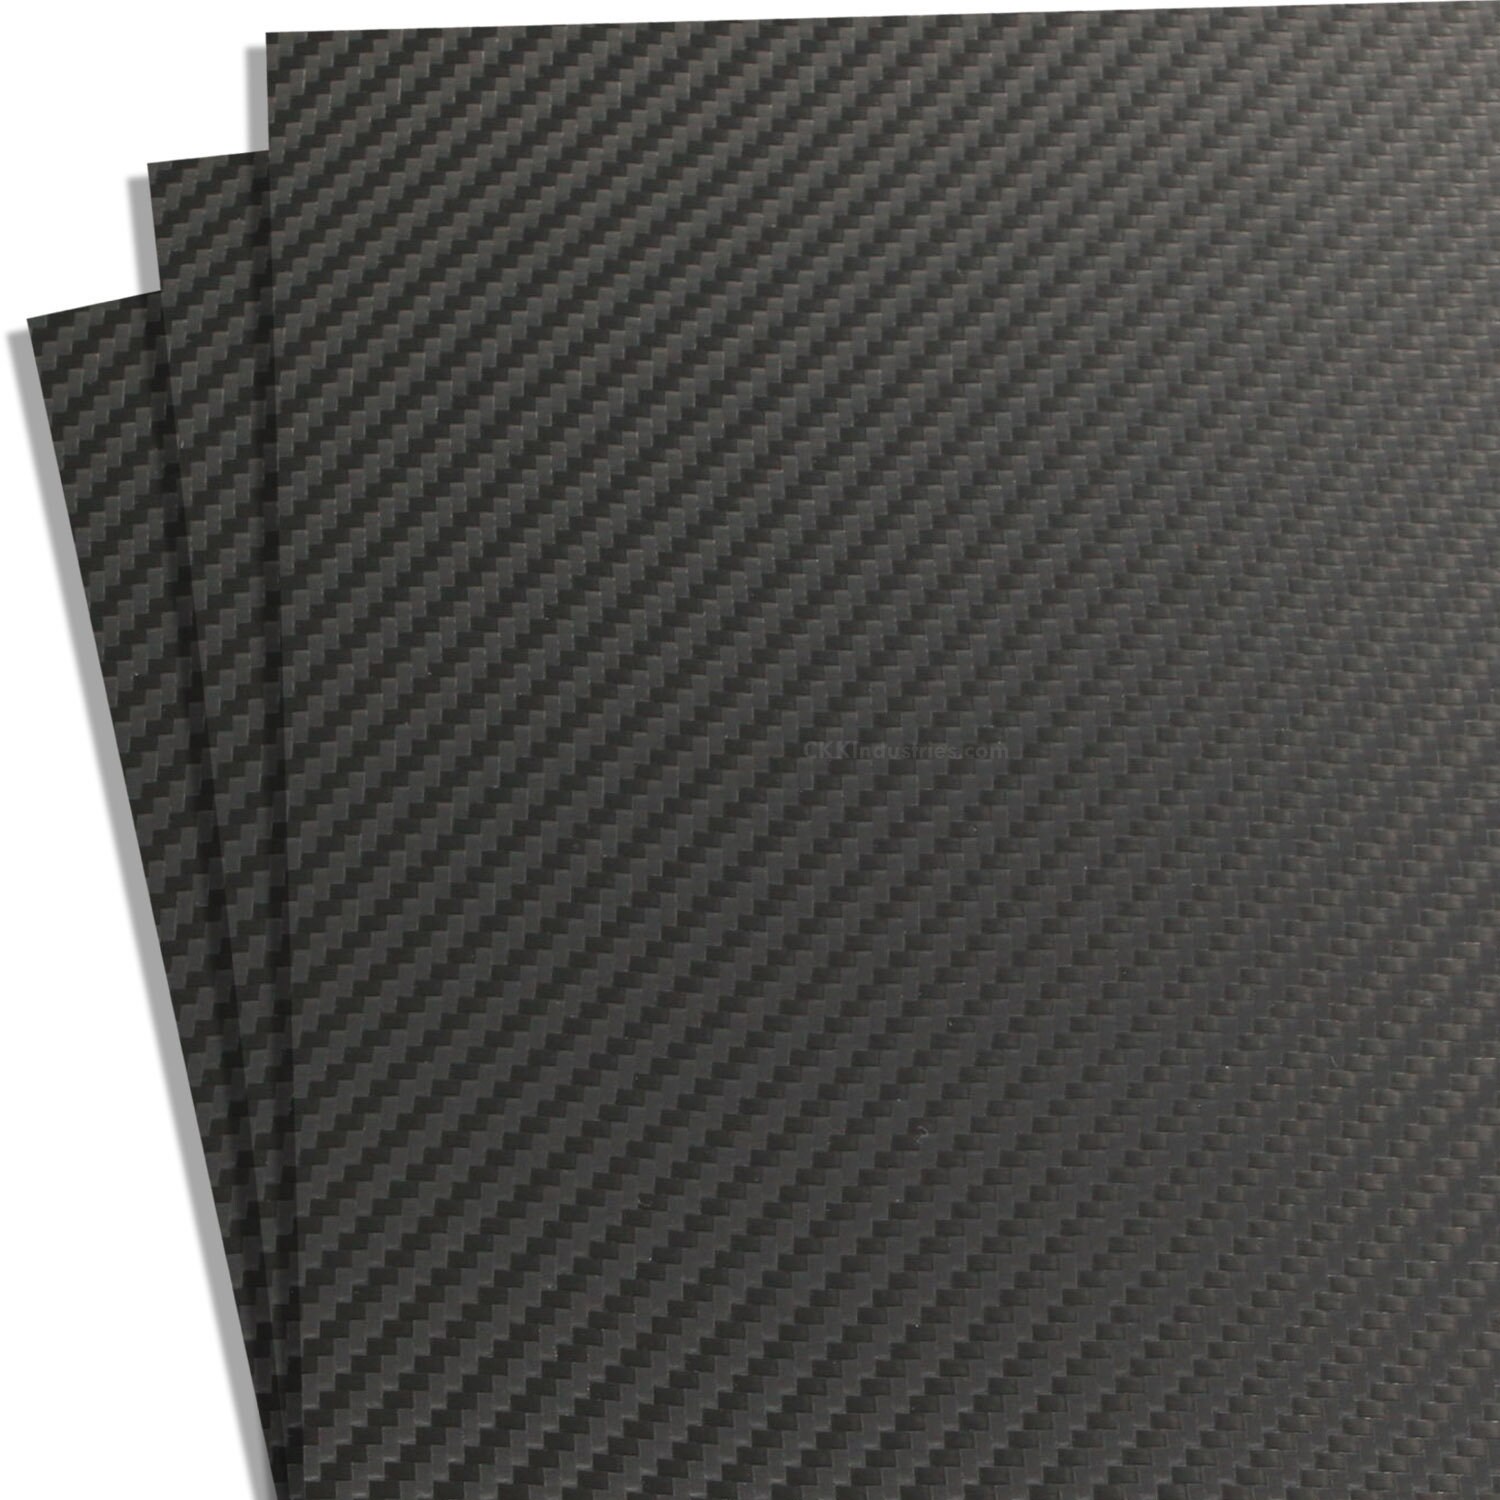 Free Shipping 3 Sheets Plastic Drainage Mesh / Screen / Net for Bonsai Pot  7.8x 11.8 Black 